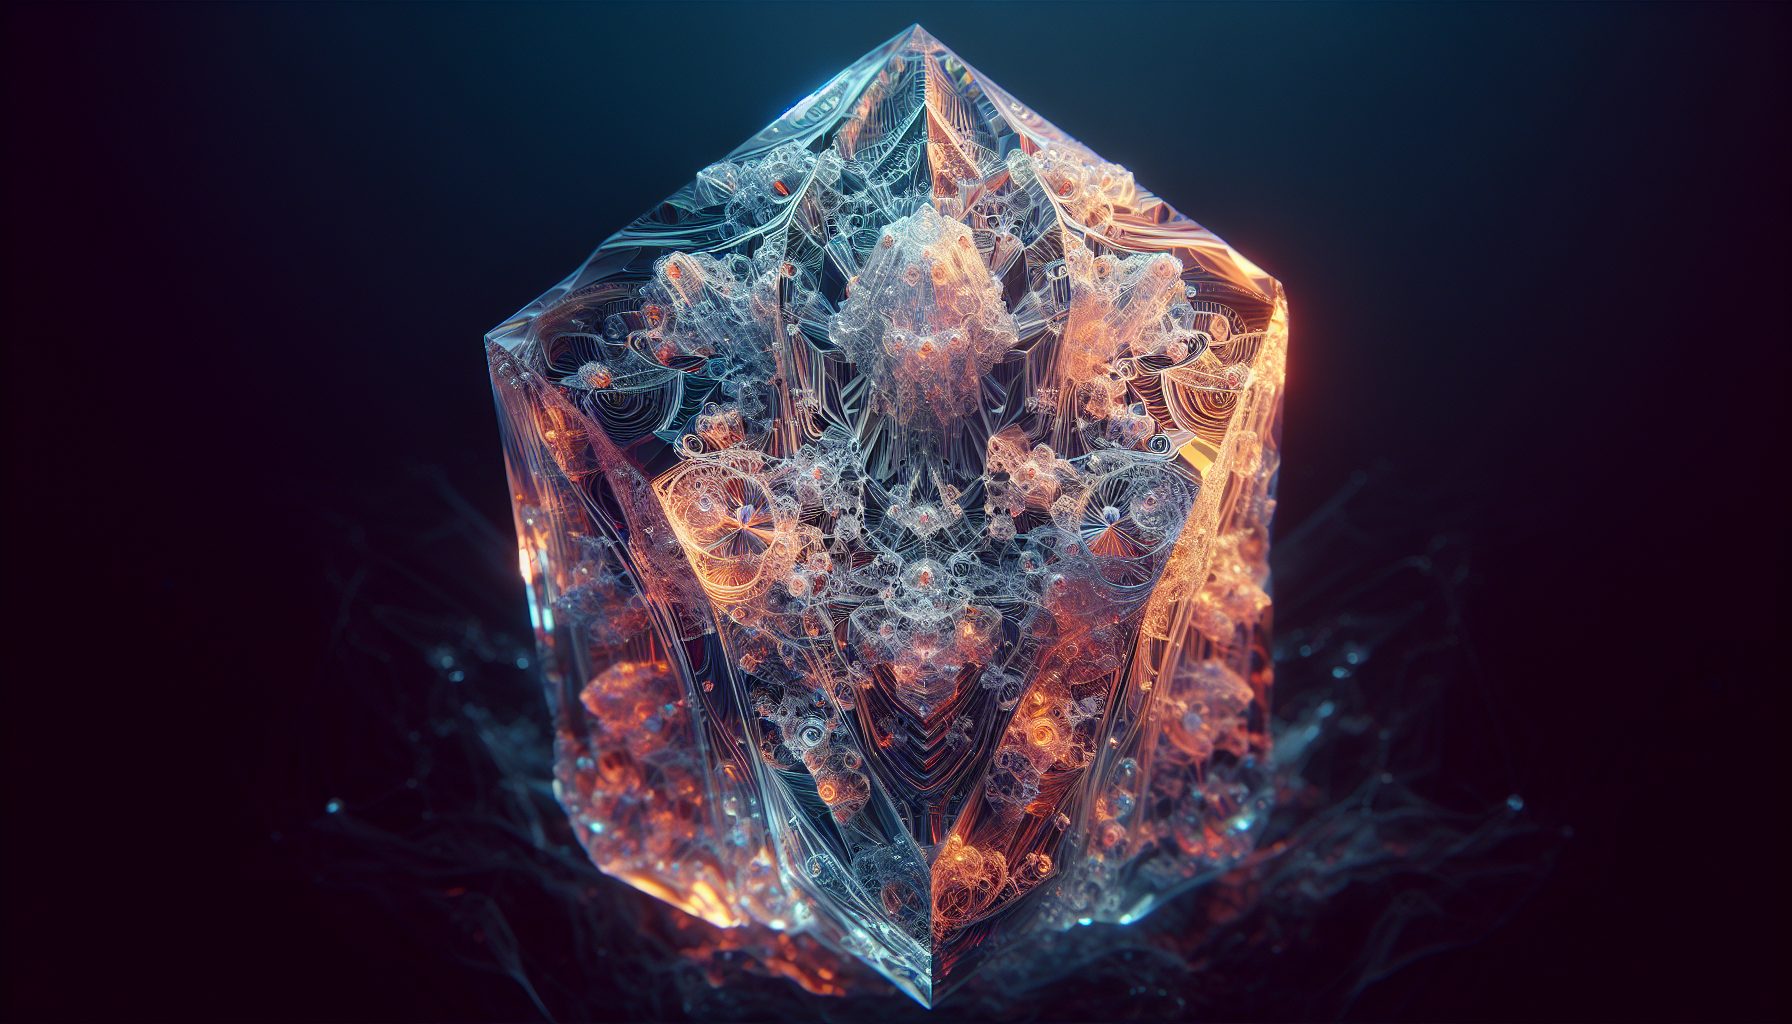 Crystals' interior visualization